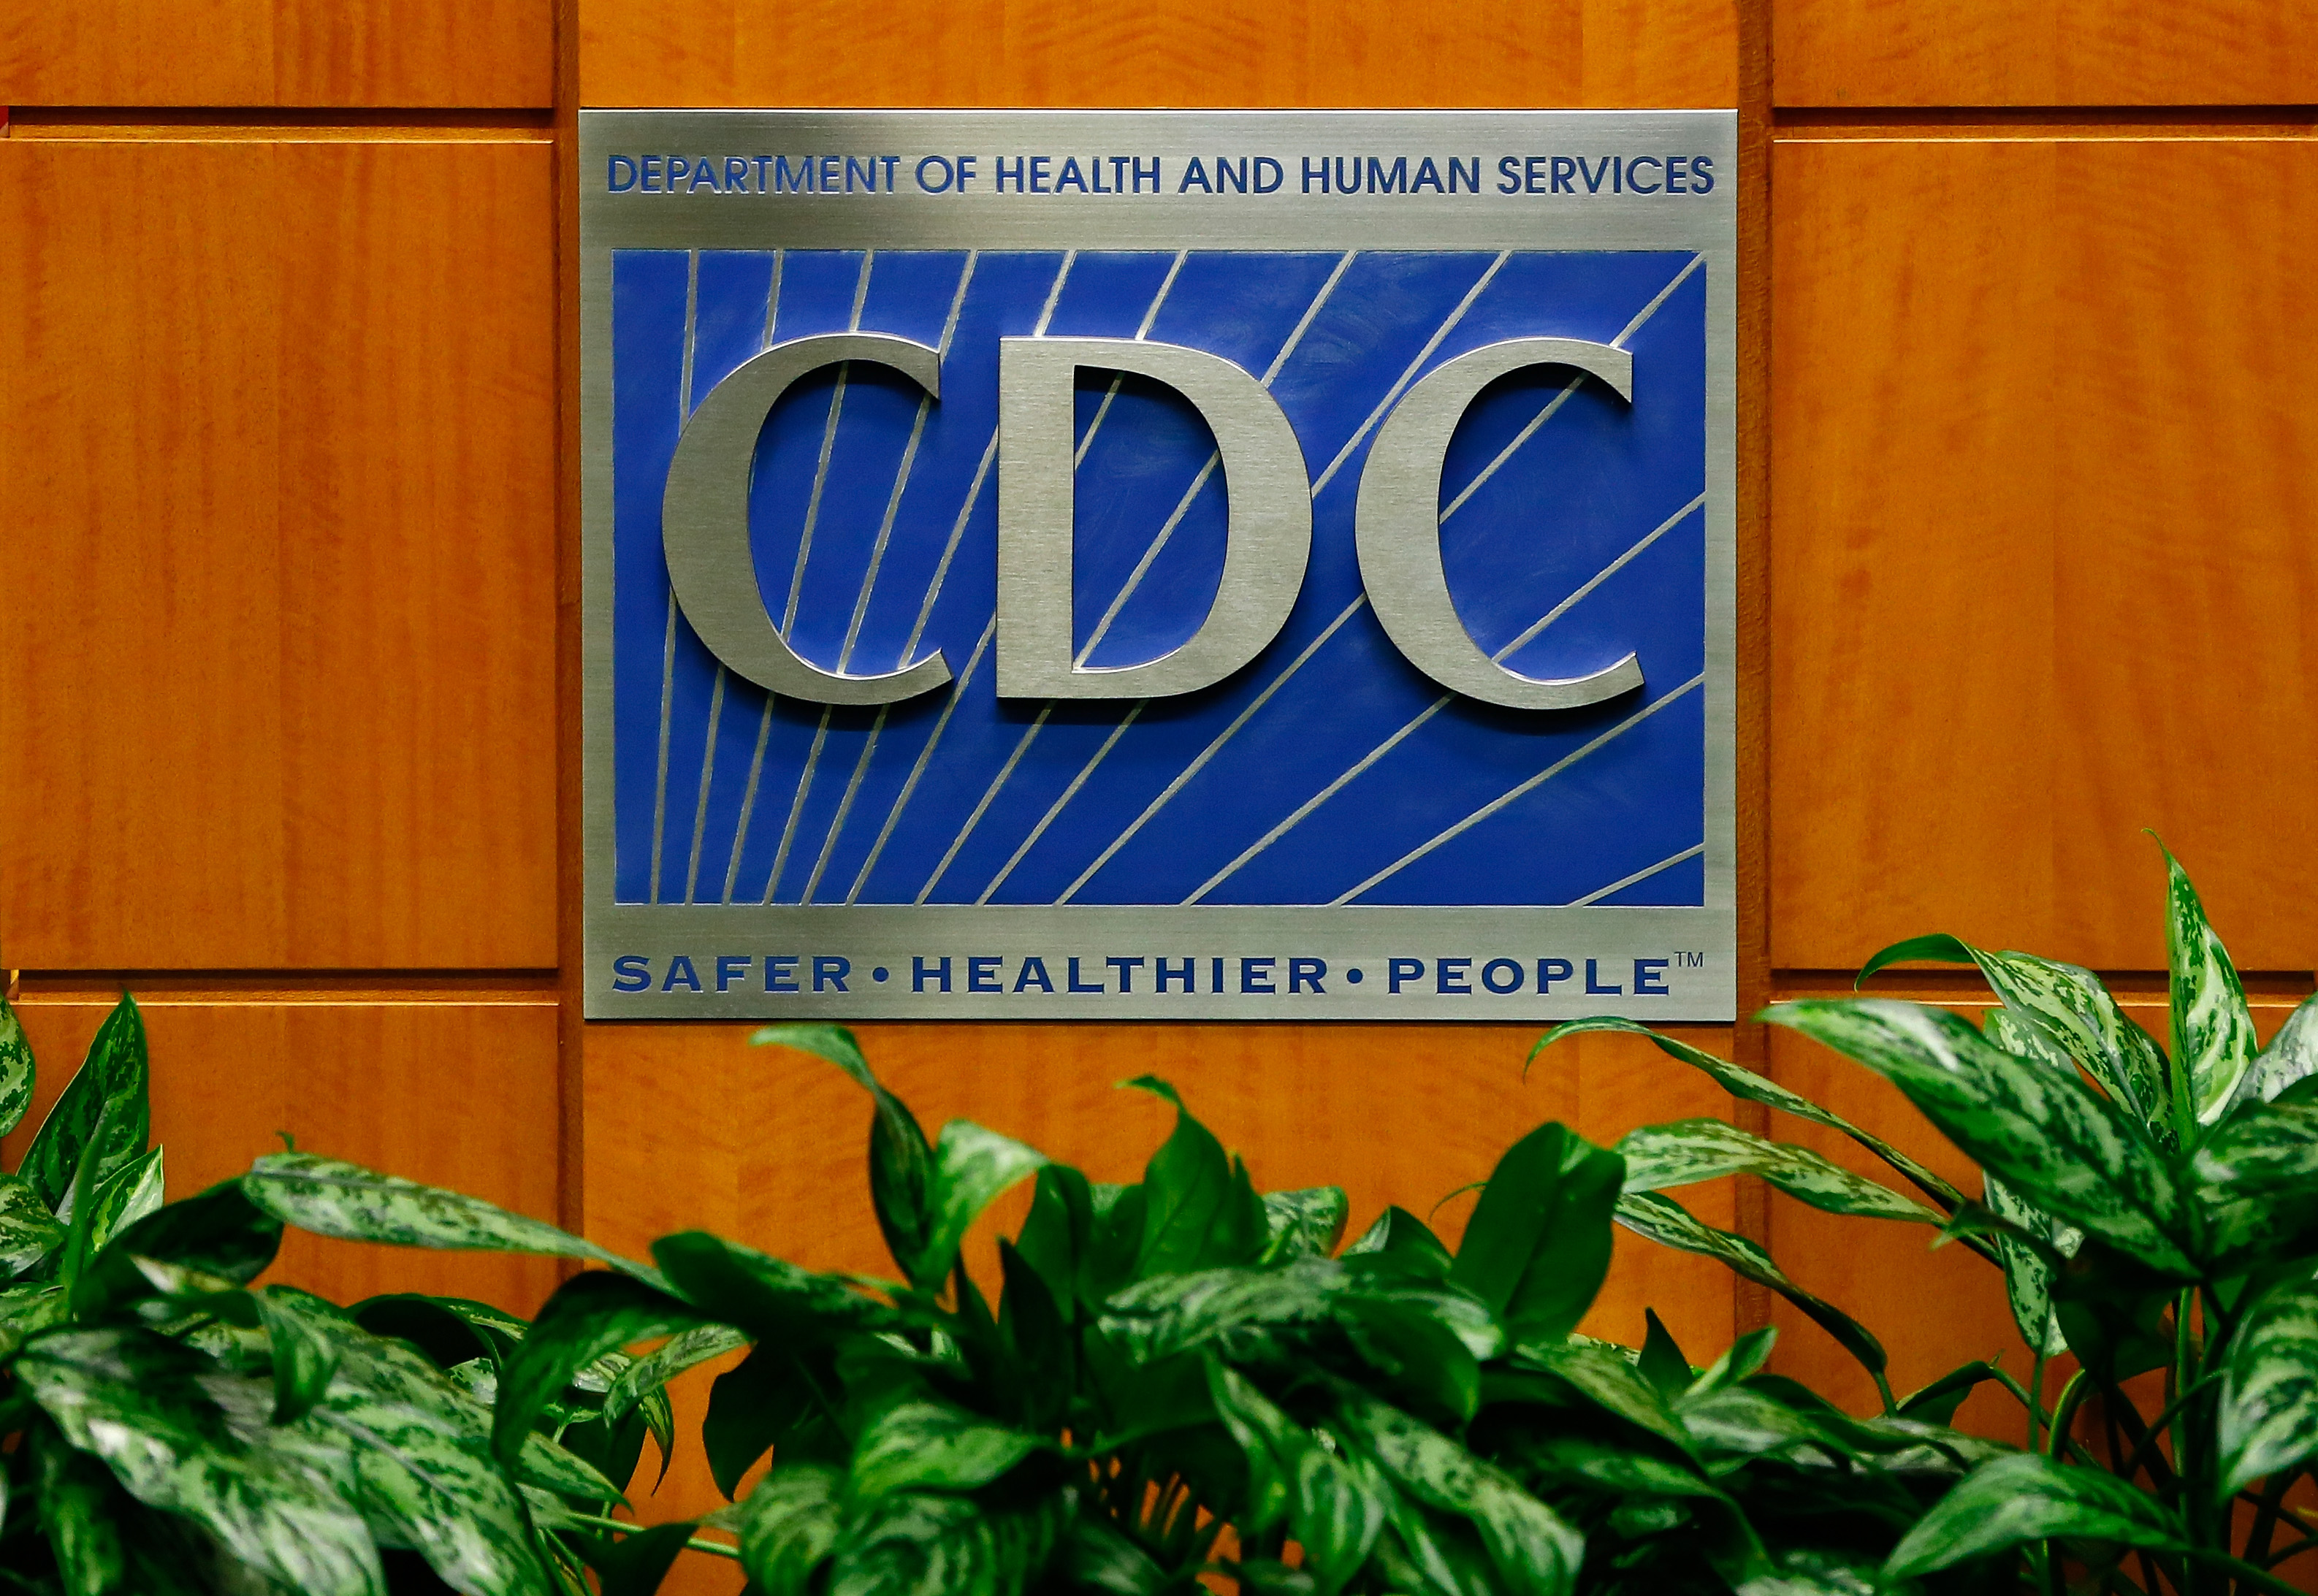 CDC.